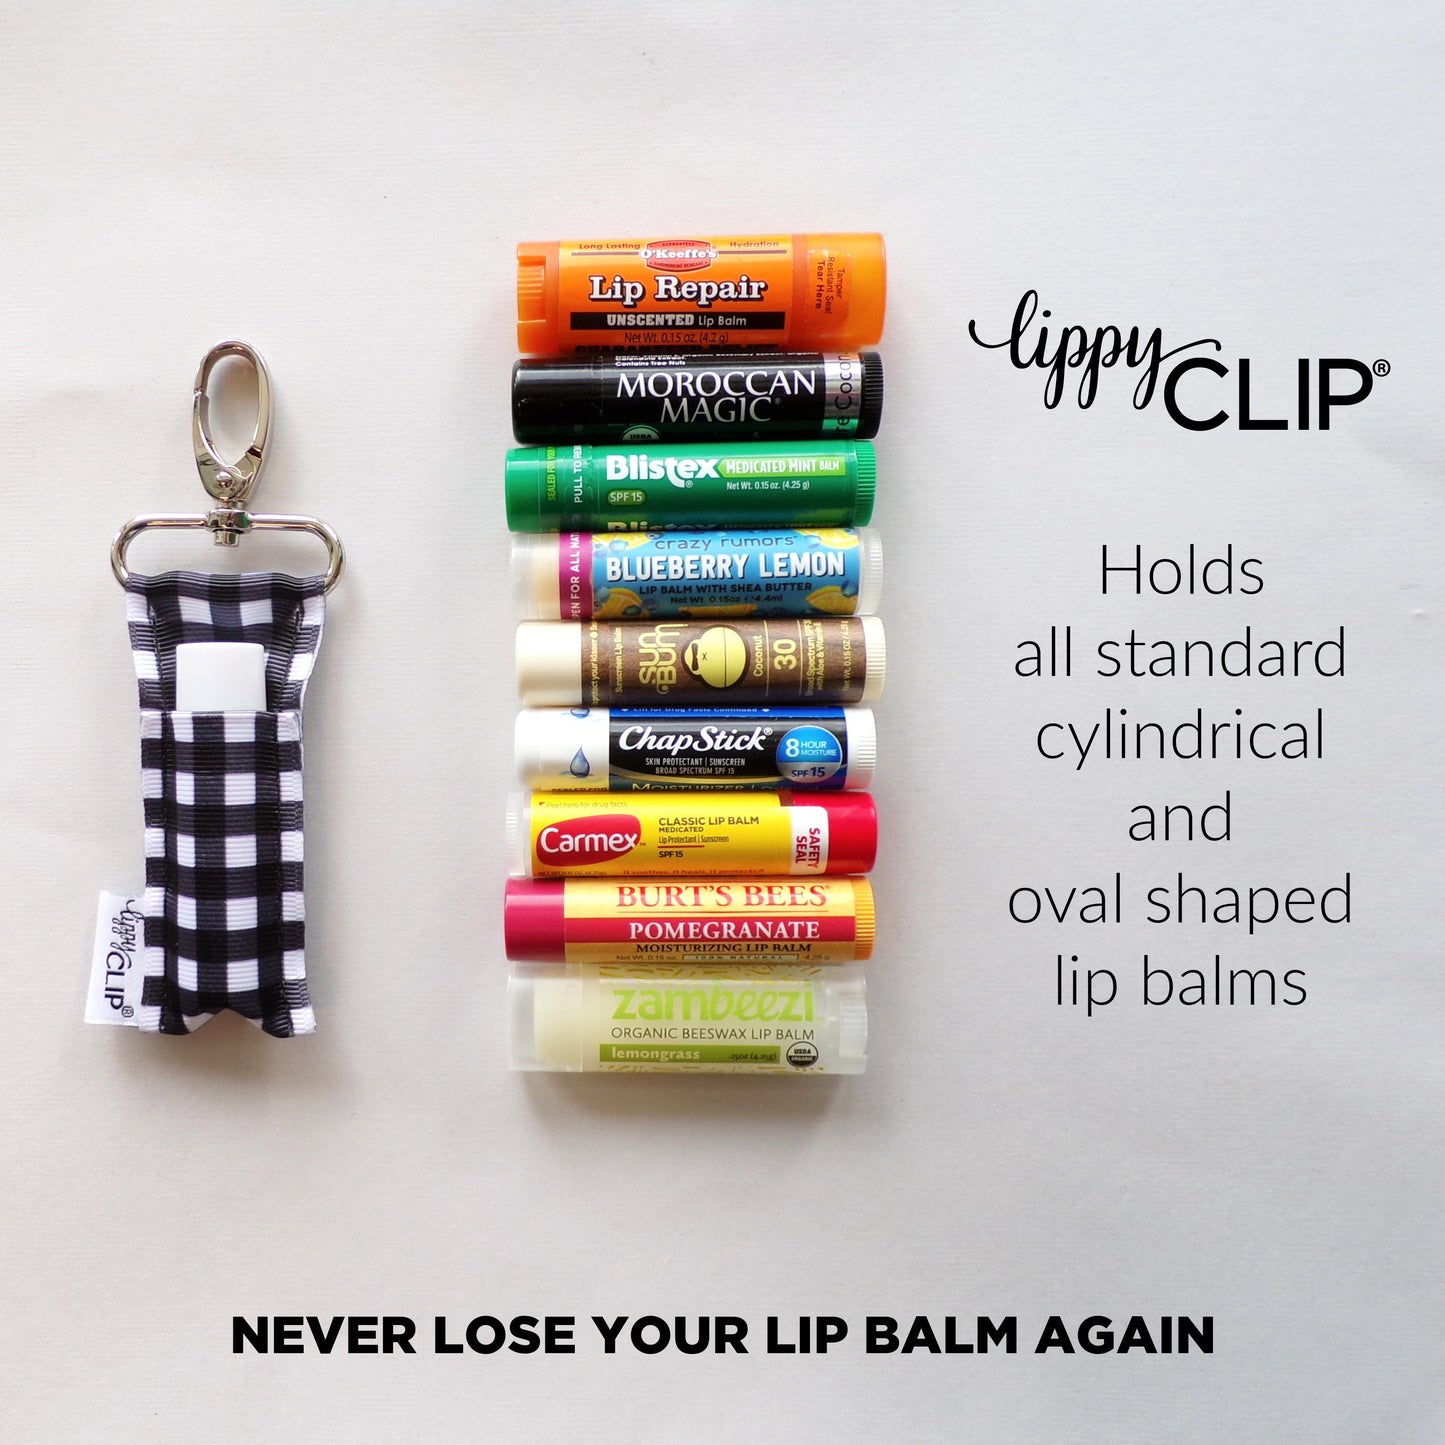 Let's Cheer LippyClip® Lip Balm Holder